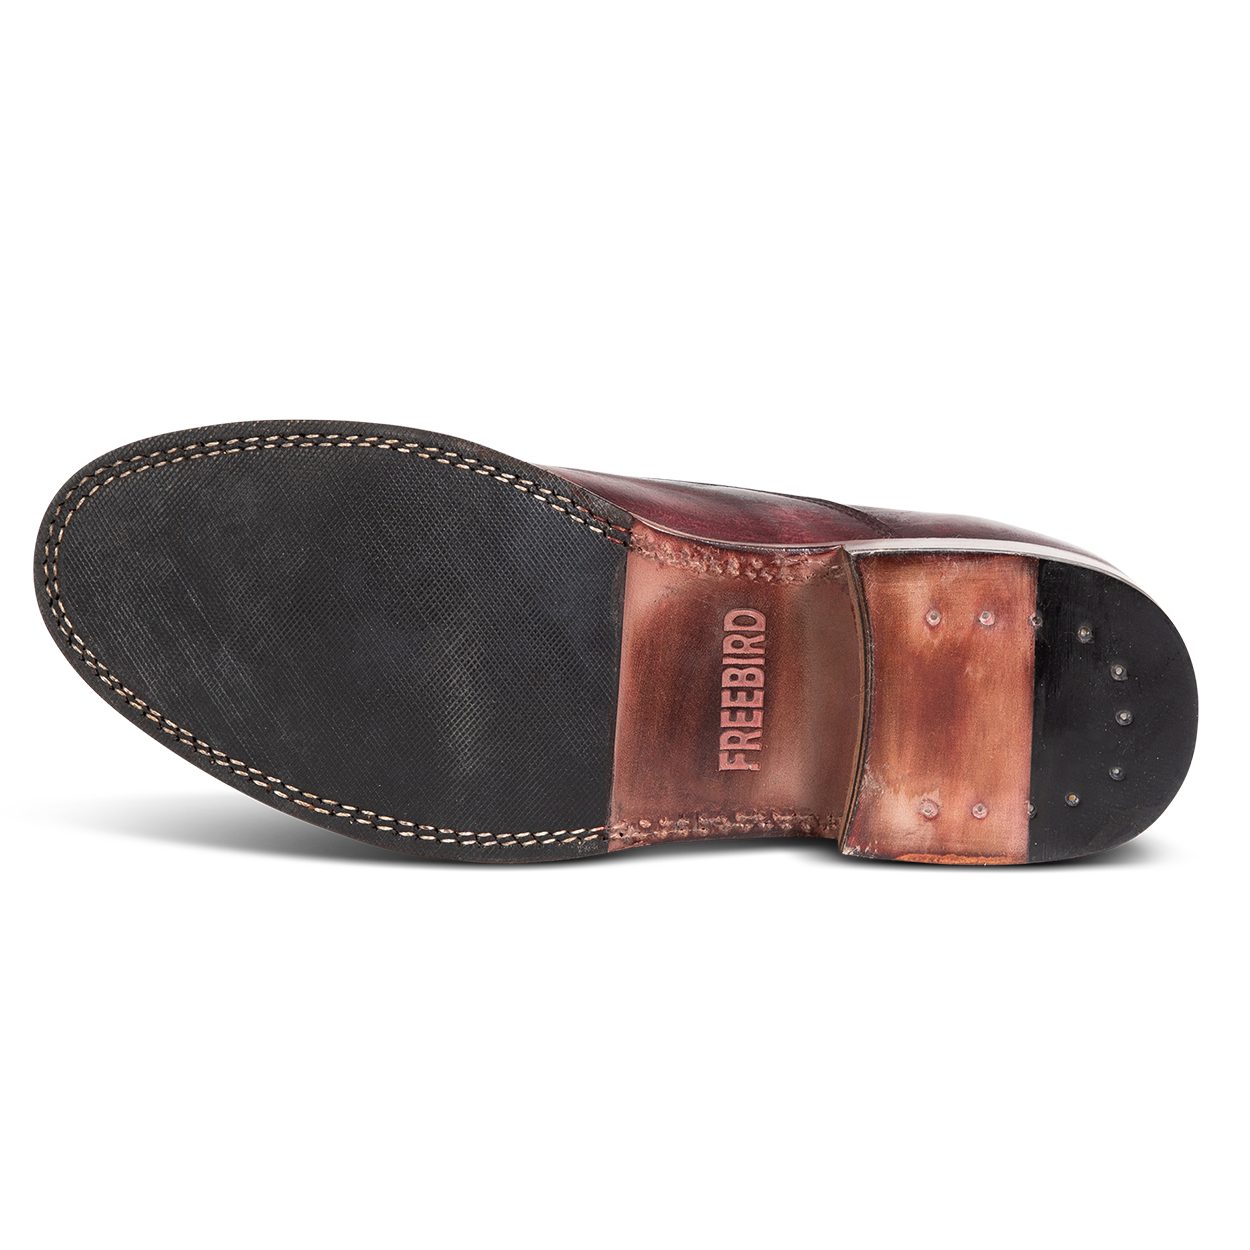 Rubber sole imprinted with FREEBIRD on men's Detrick wine shoe